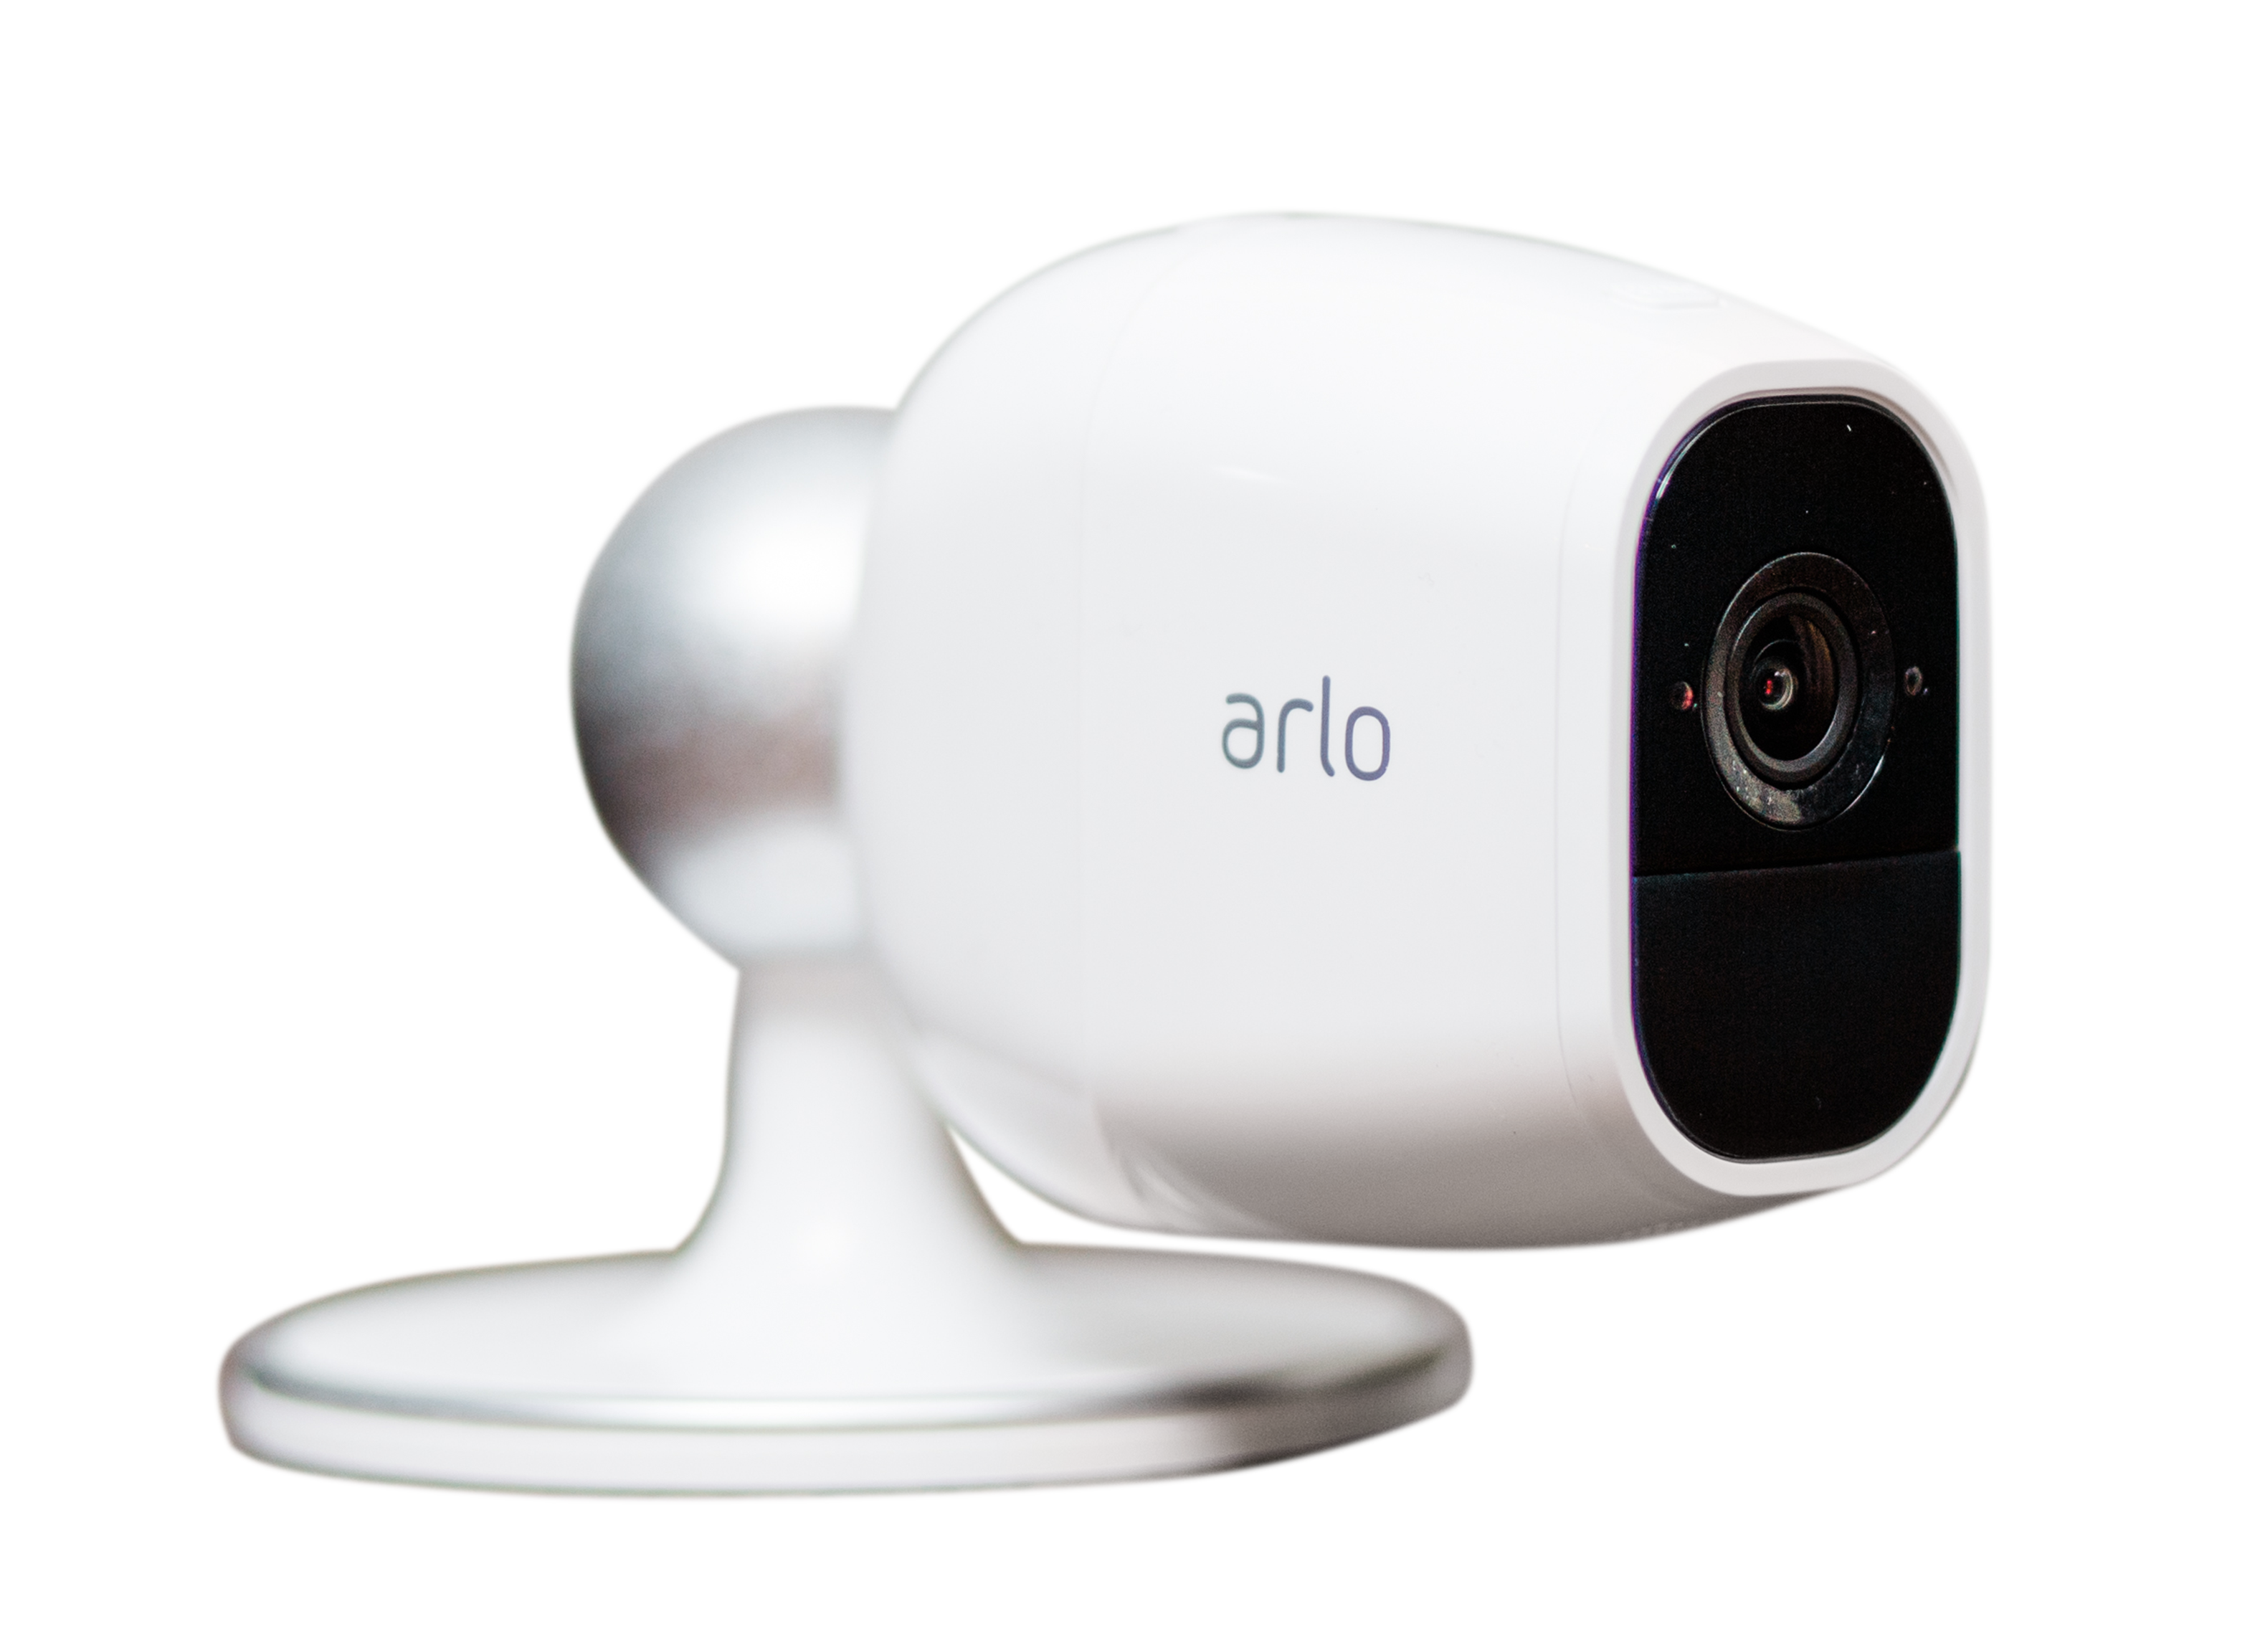 Overvåge eksperimentel Pløje Netgear Arlo Pro 2 Smart Camera VMC4030P Home Security Camera Review -  Consumer Reports